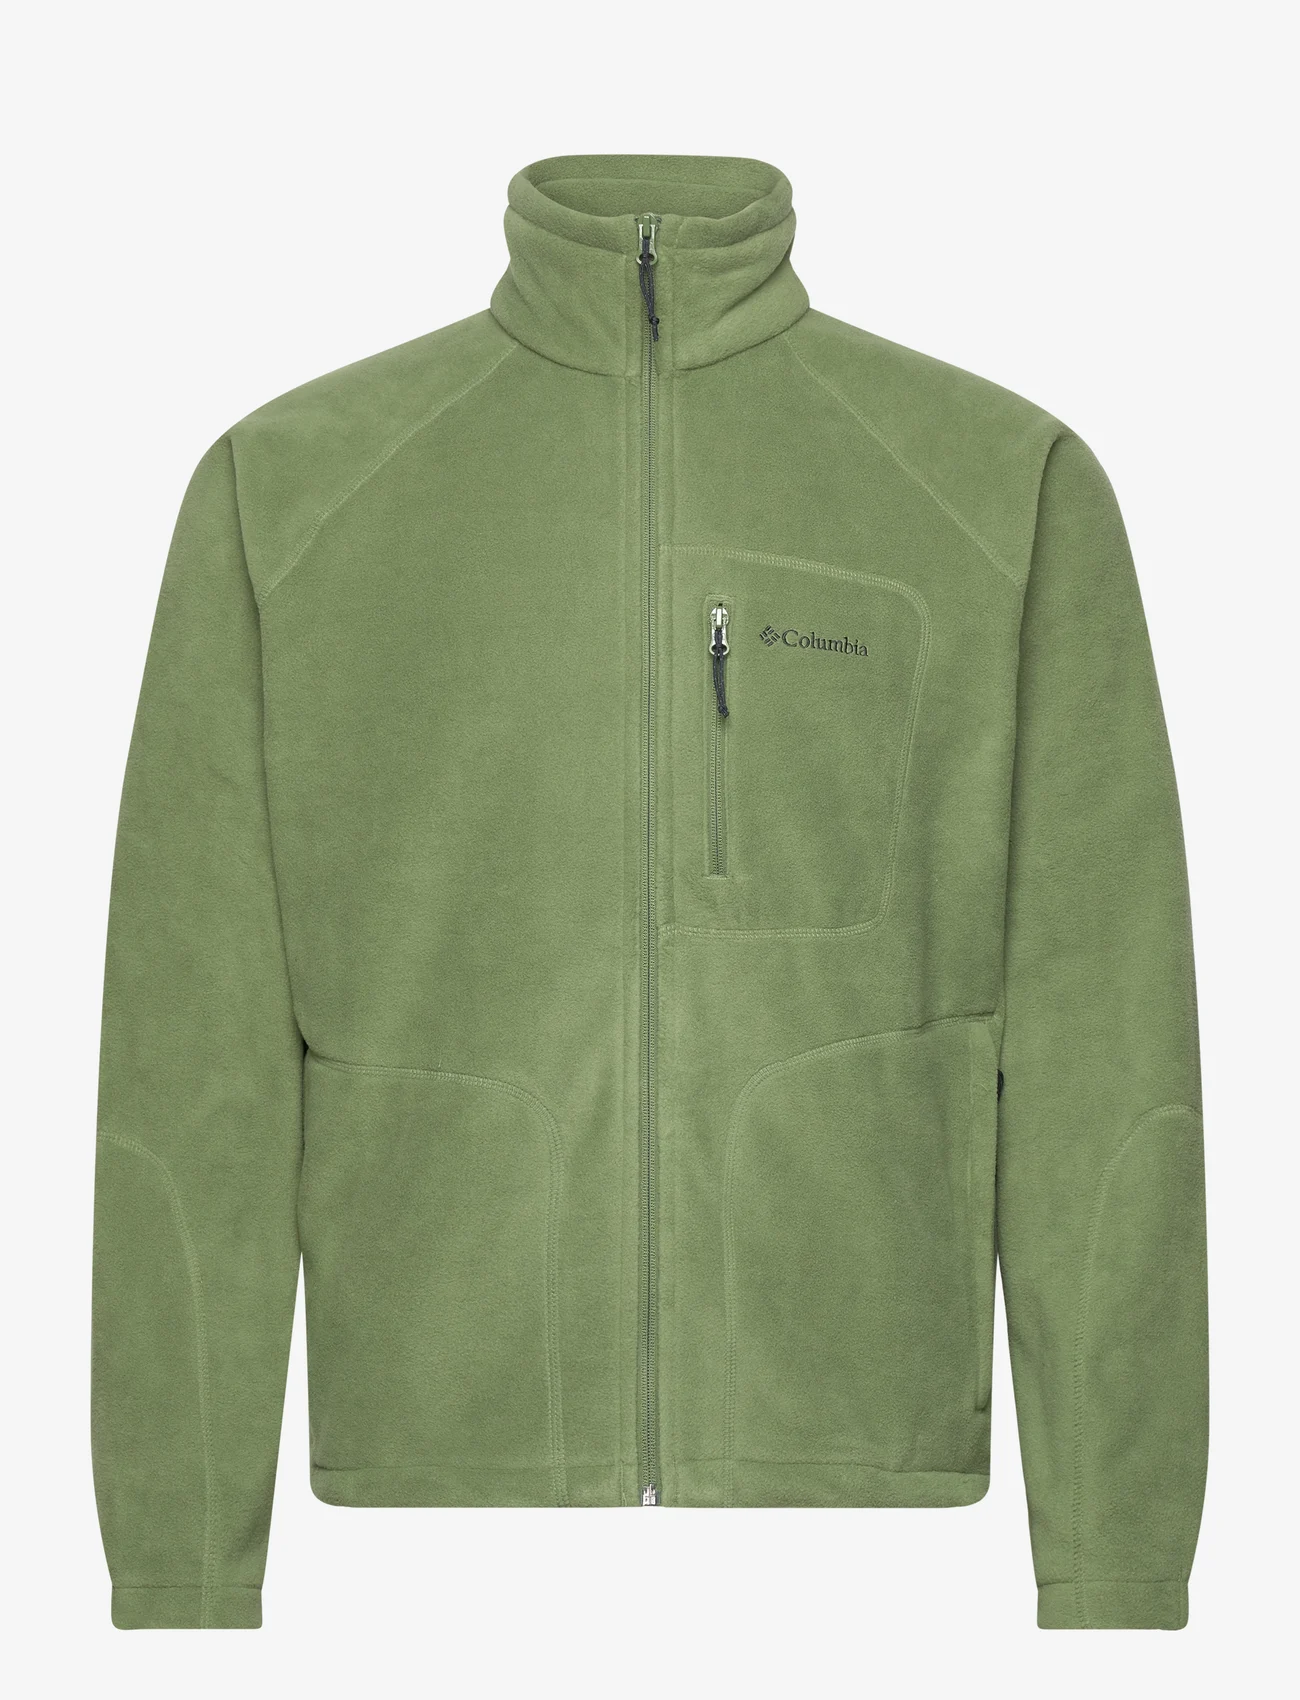 Columbia Sportswear - Fast Trek II Full Zip Fleece - mid layer jackets - canteen - 0